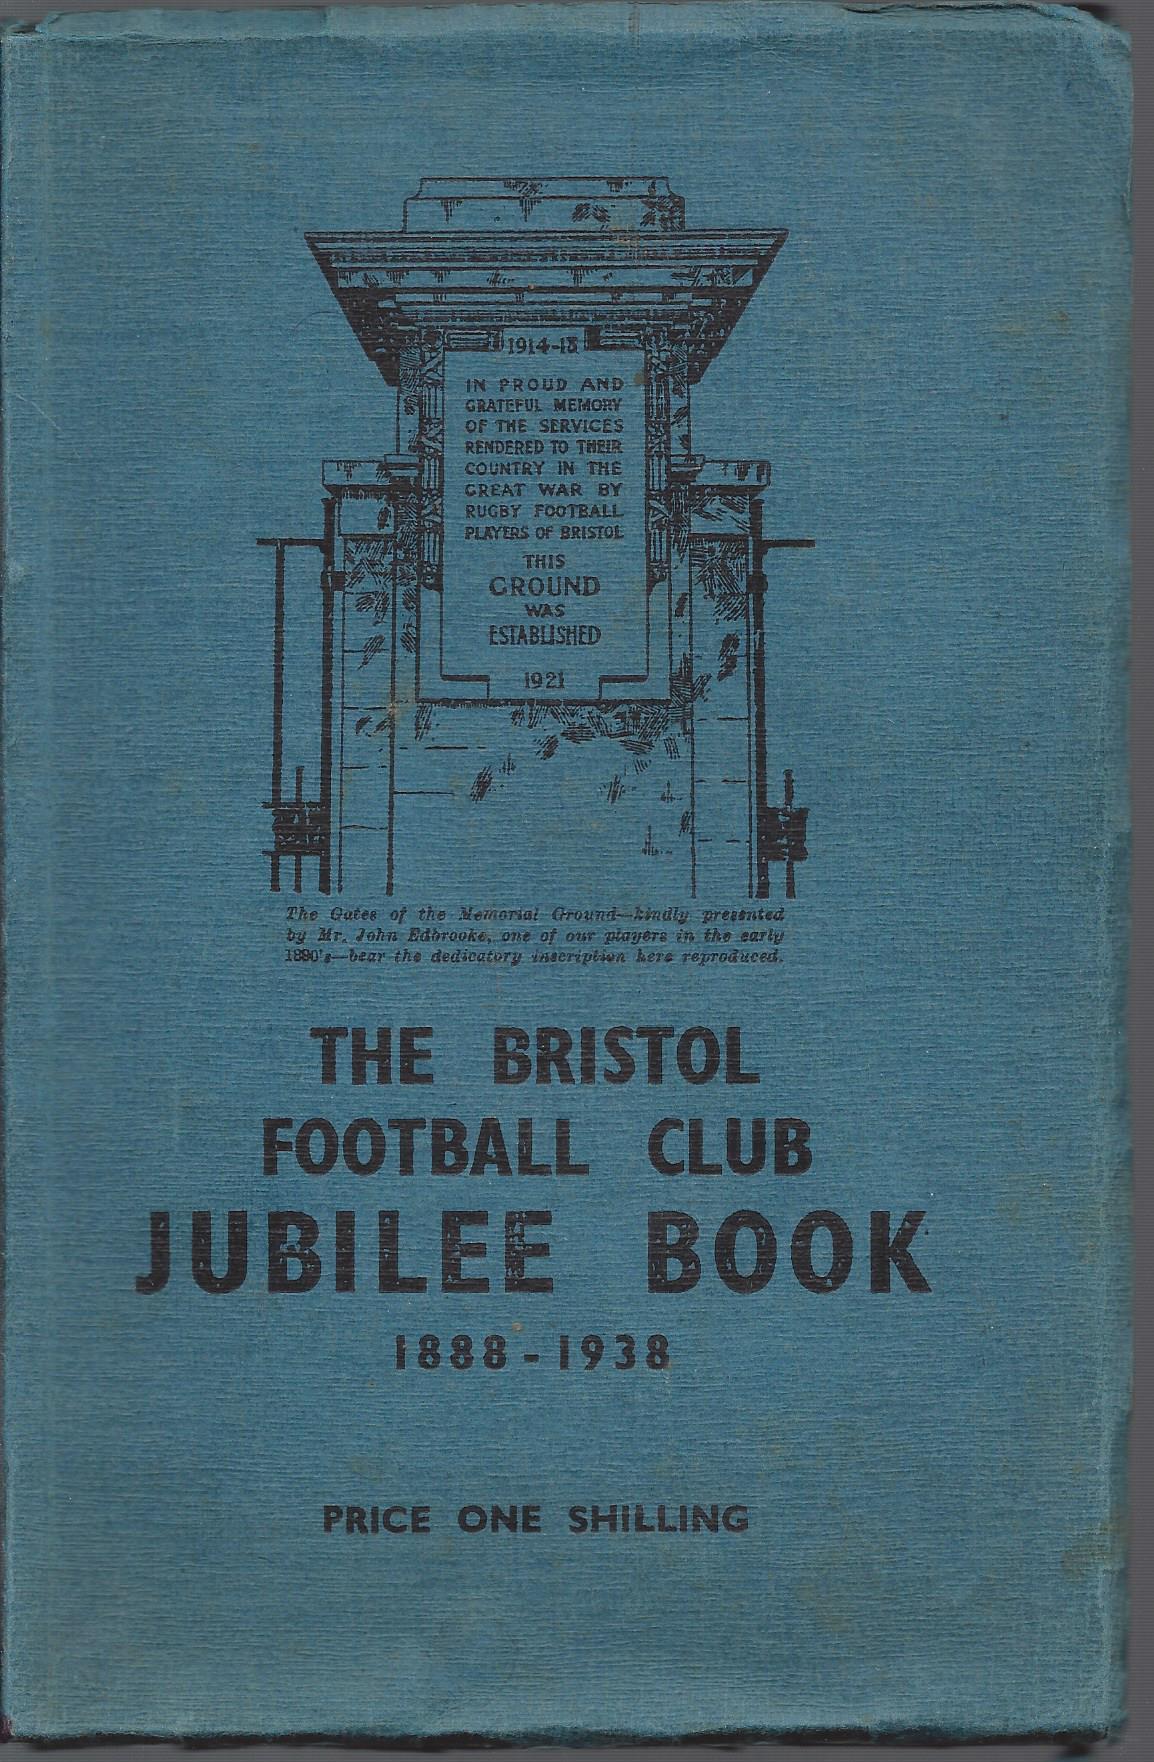  - The Bristol Football Club Jubilee Book 1888-1938 -1888 - 1938